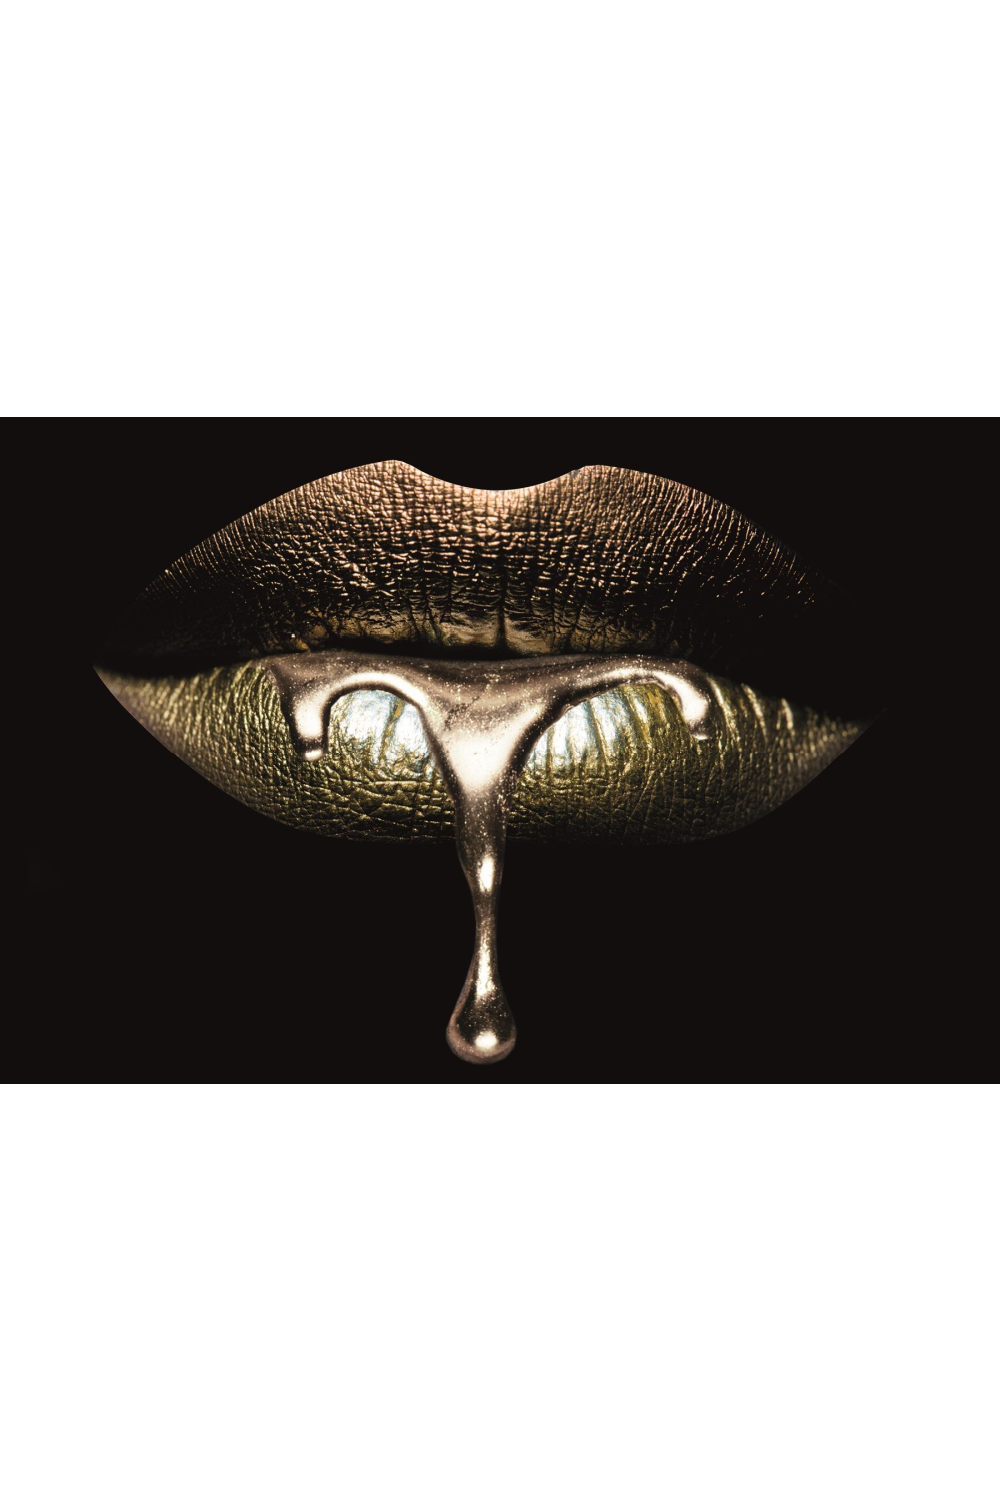 Pouting Lips Photographic Artwork | Andrew Martin Golden Kiss | Oroa.com.